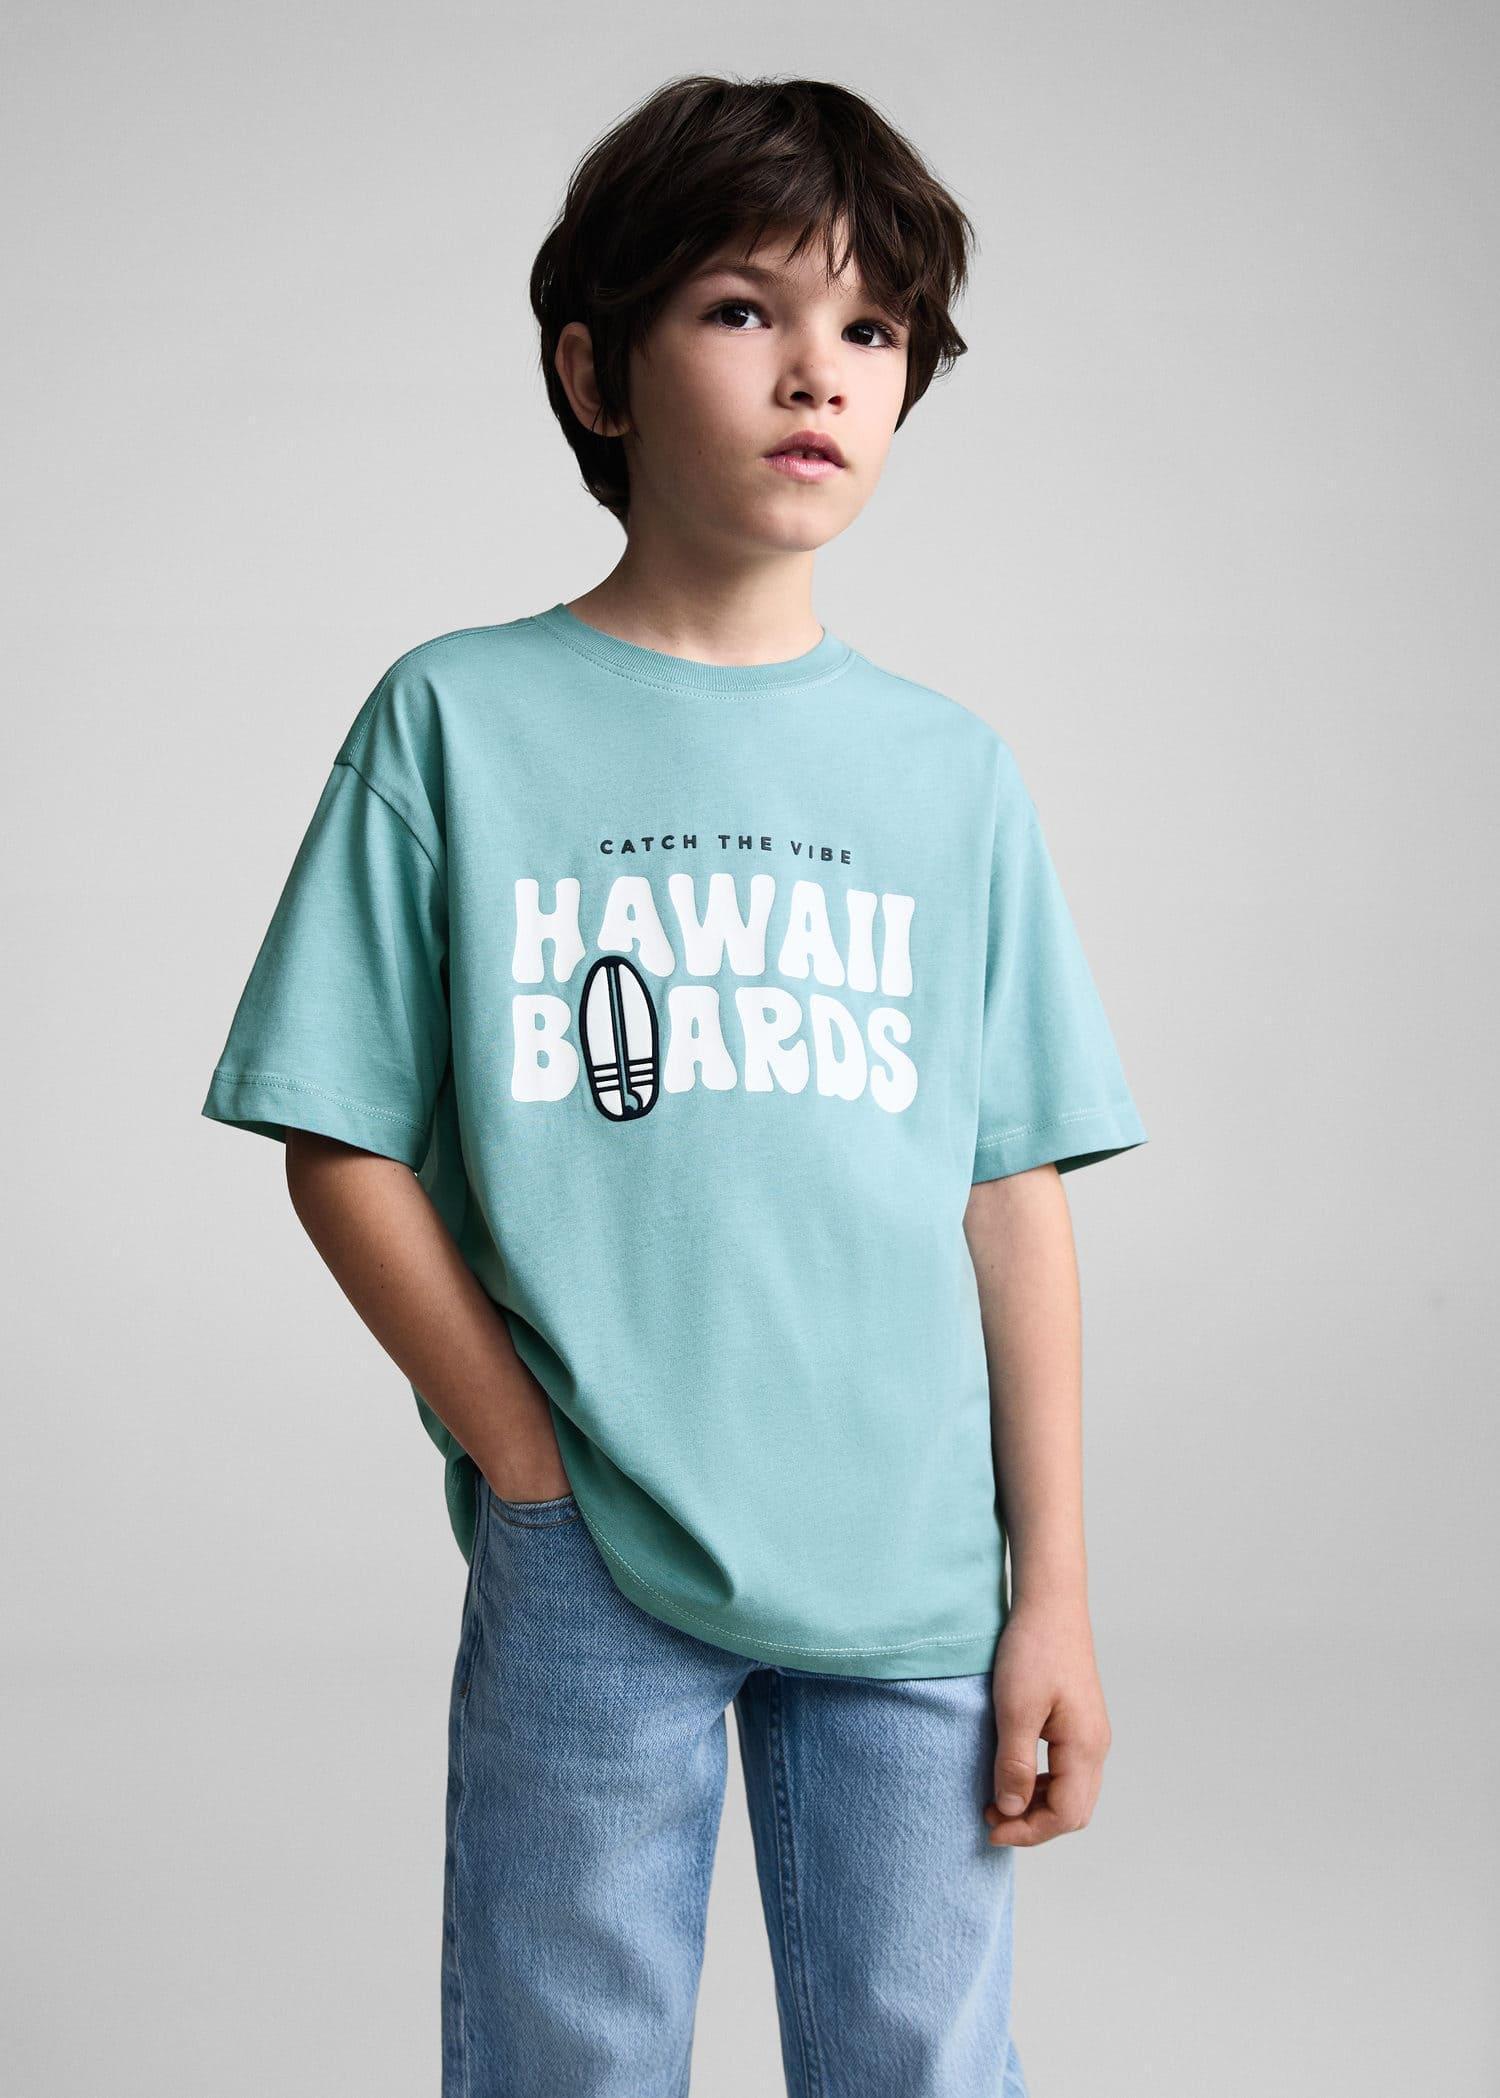 Mango - Green Printed Cotton T-Shirt, Kids Boys